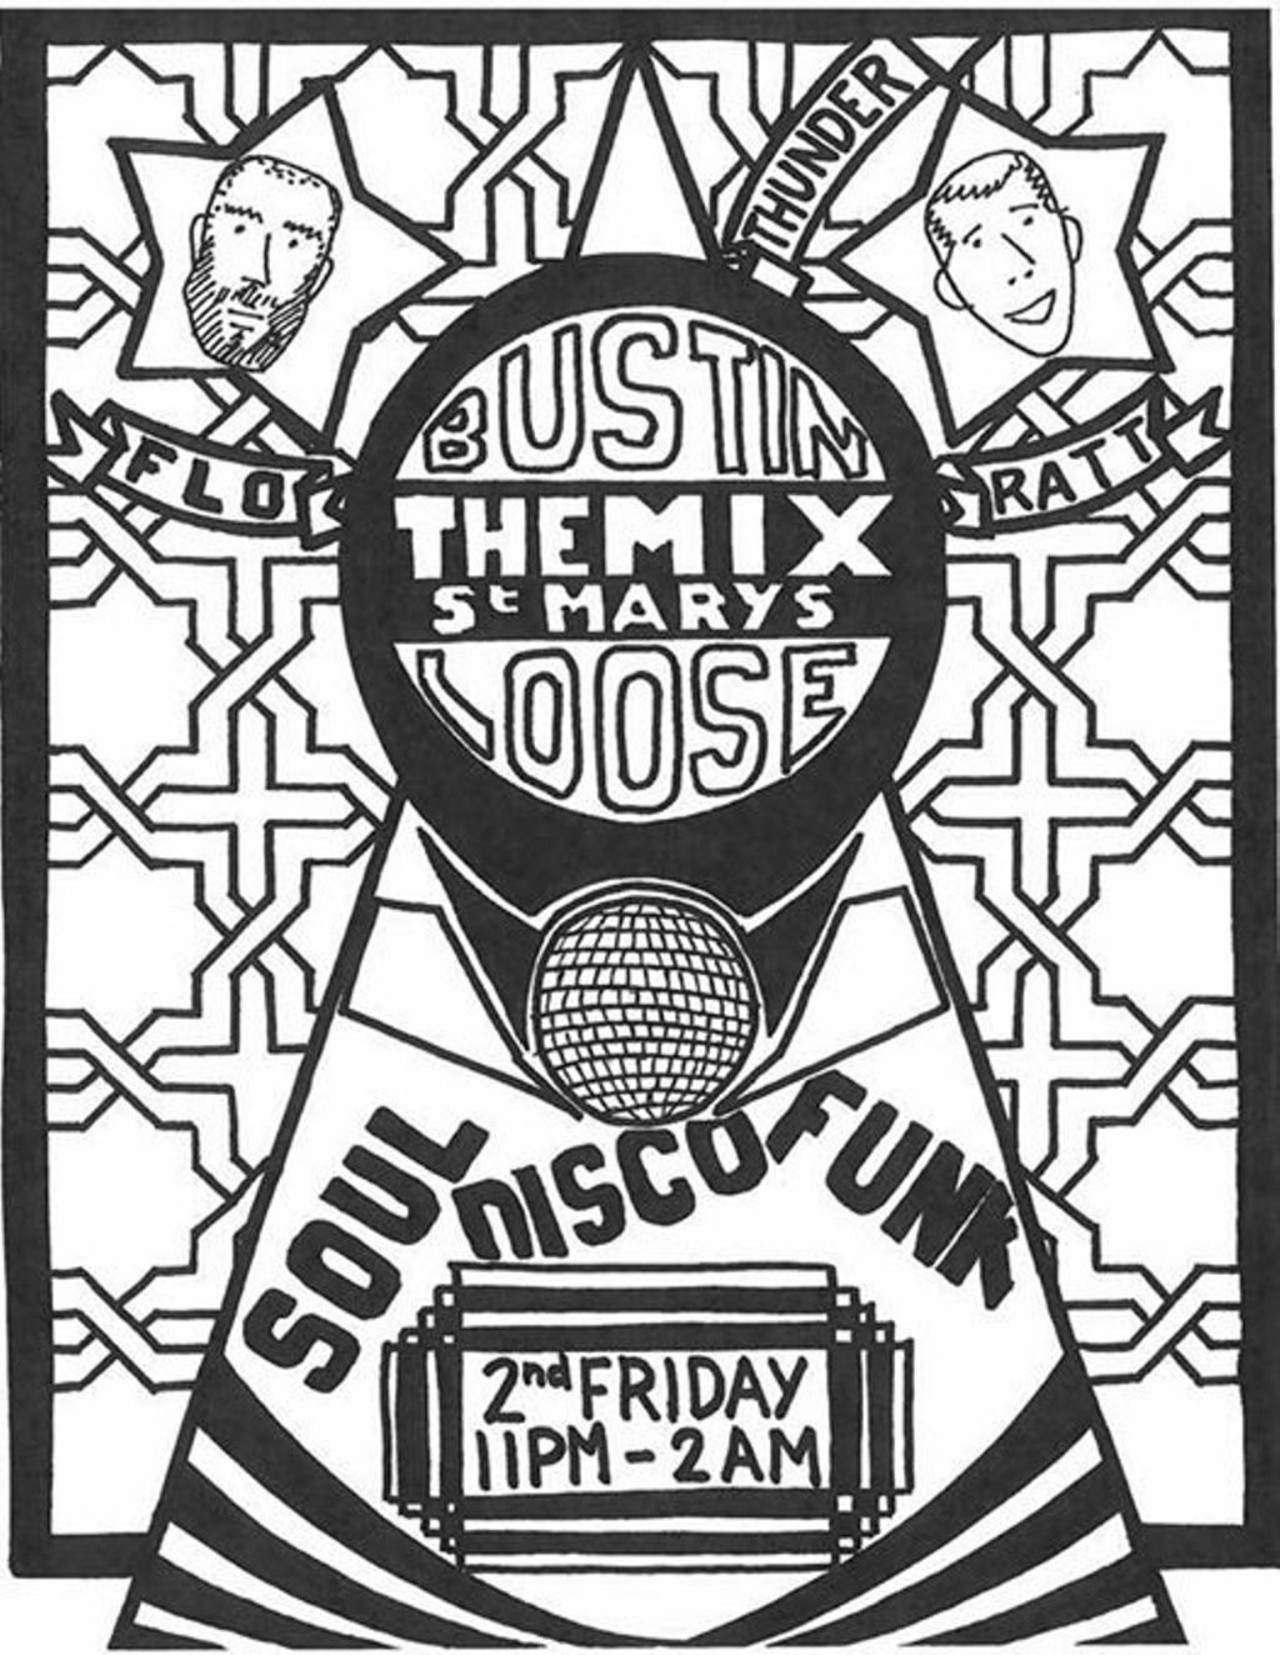 
Bustin Loose 
Fri., April 14, 11 p.m. at The Mix, Free